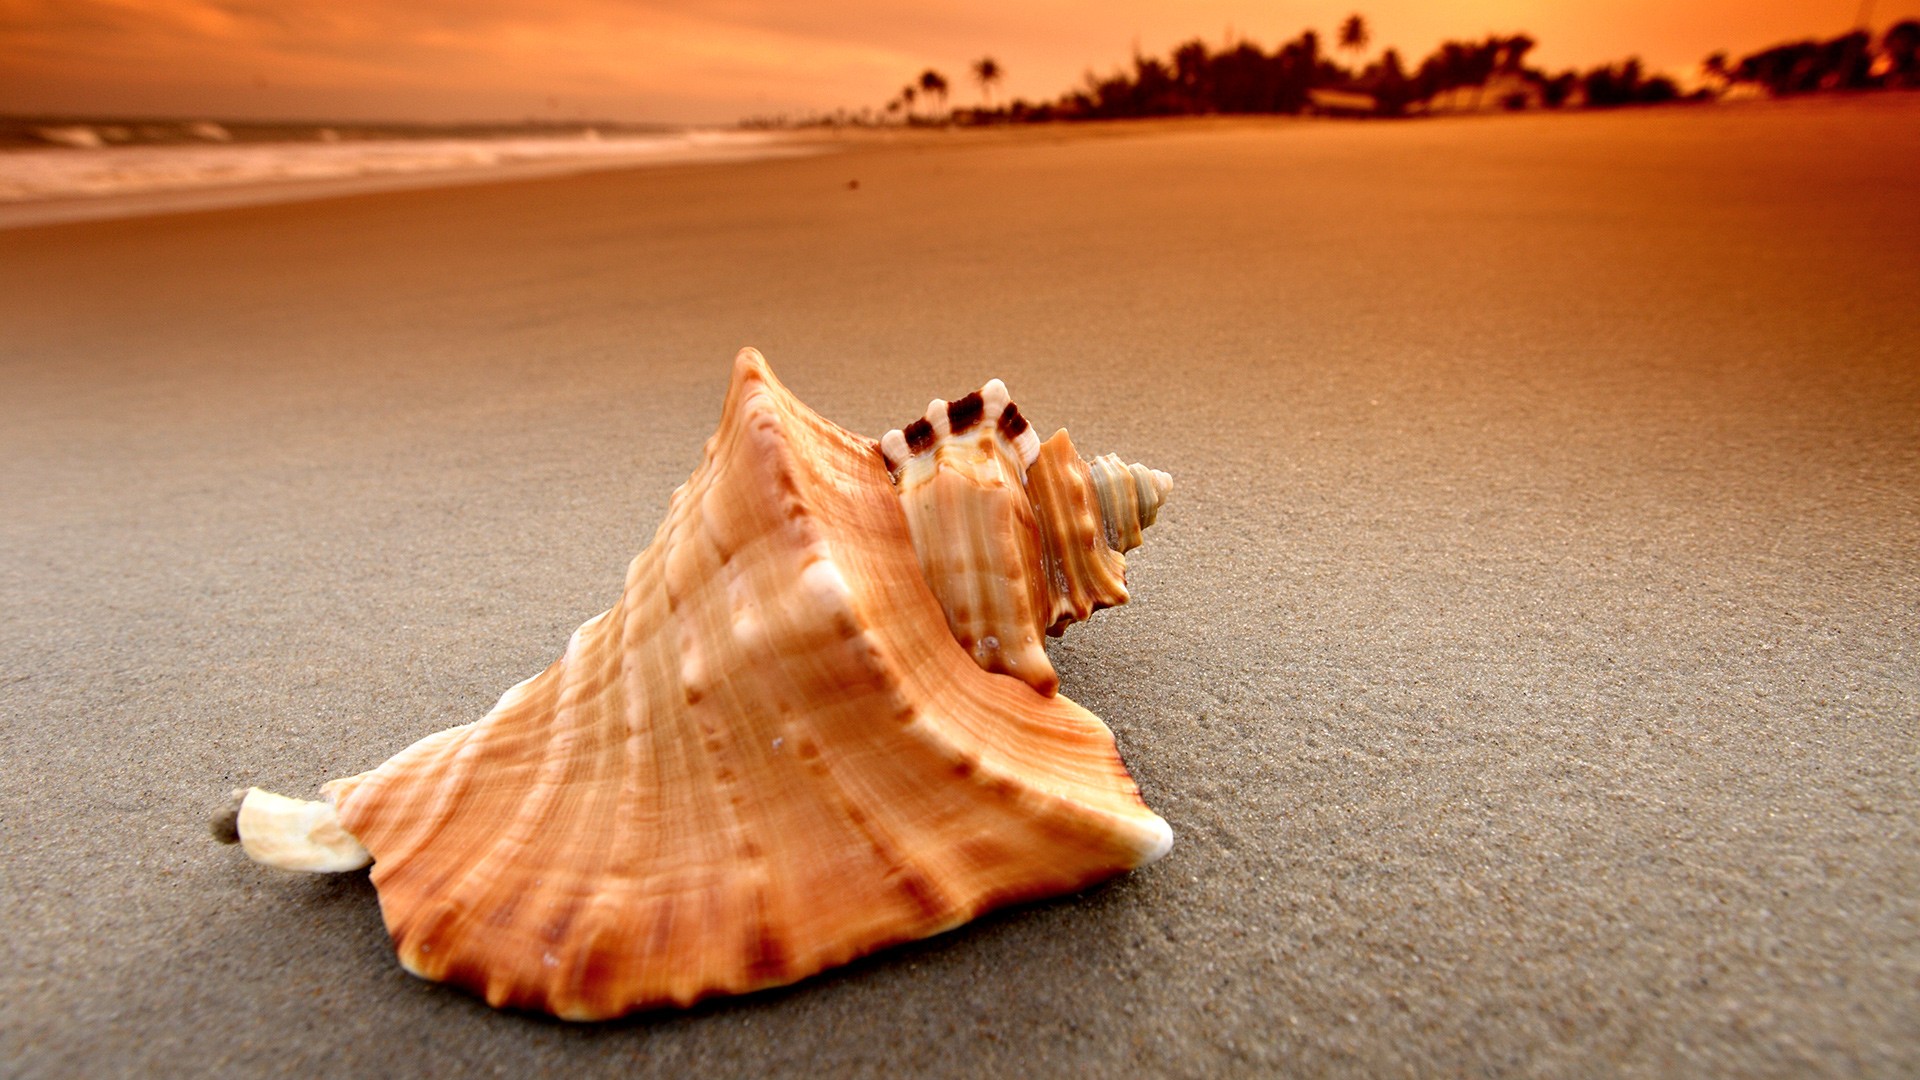 Beaches: Seashell Buster Ocean View Beach Landscape HD Wallpapers ...